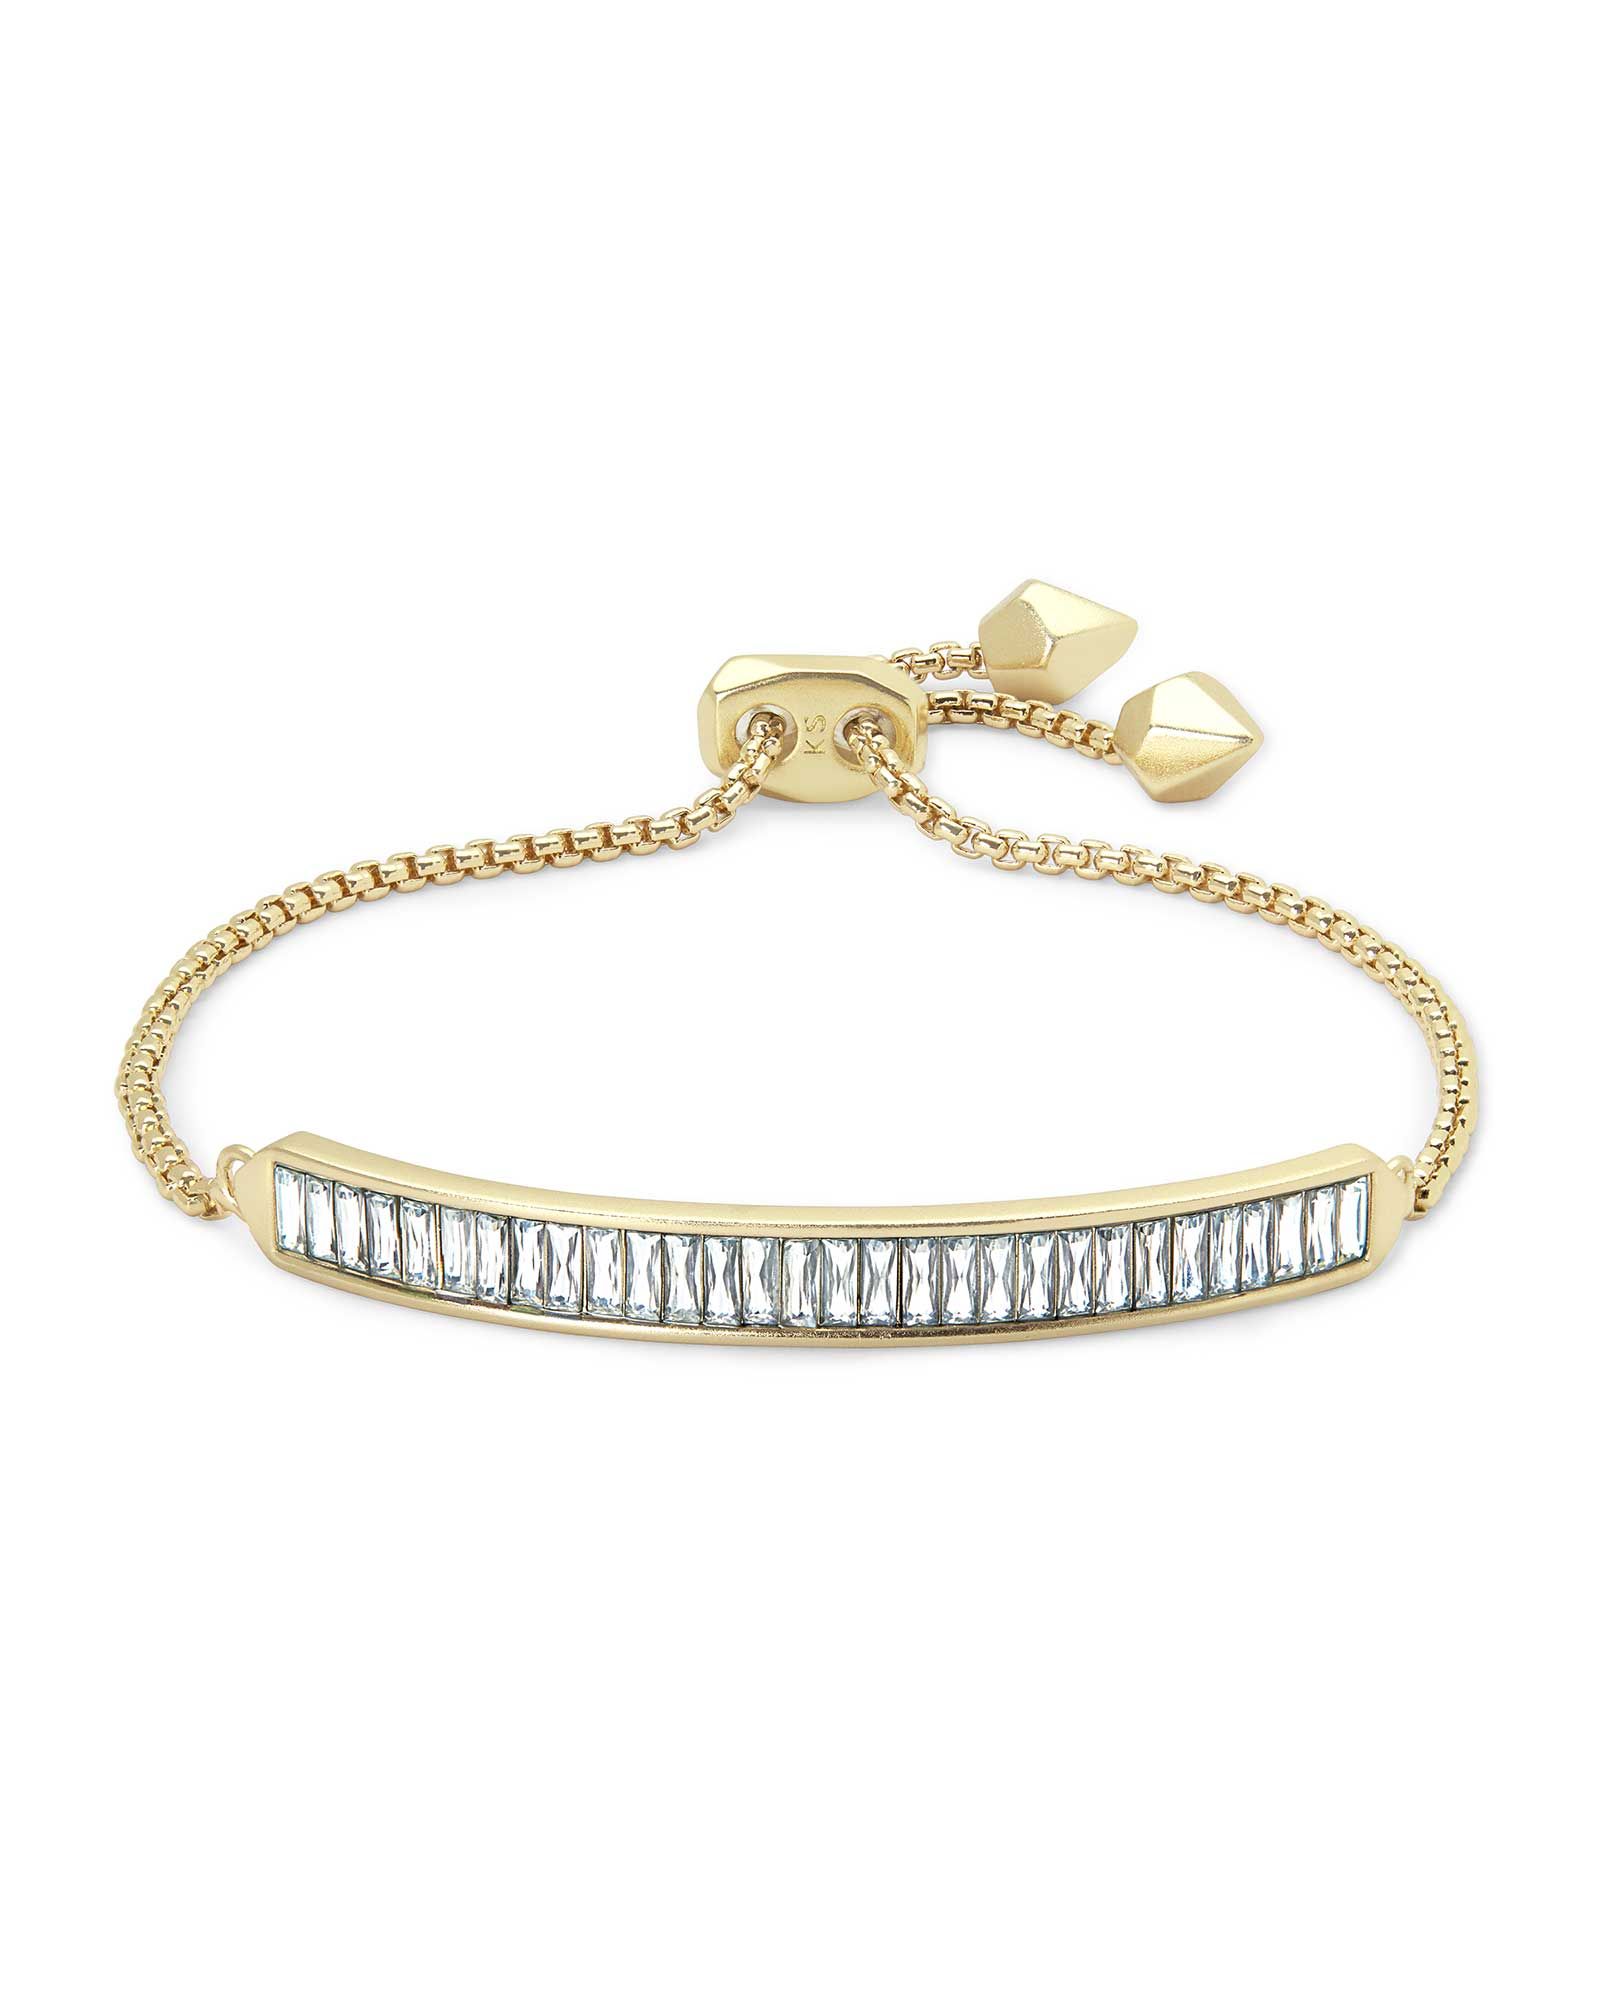 Jack Adjustable Gold Chain Bracelet in White Crystal | Kendra Scott